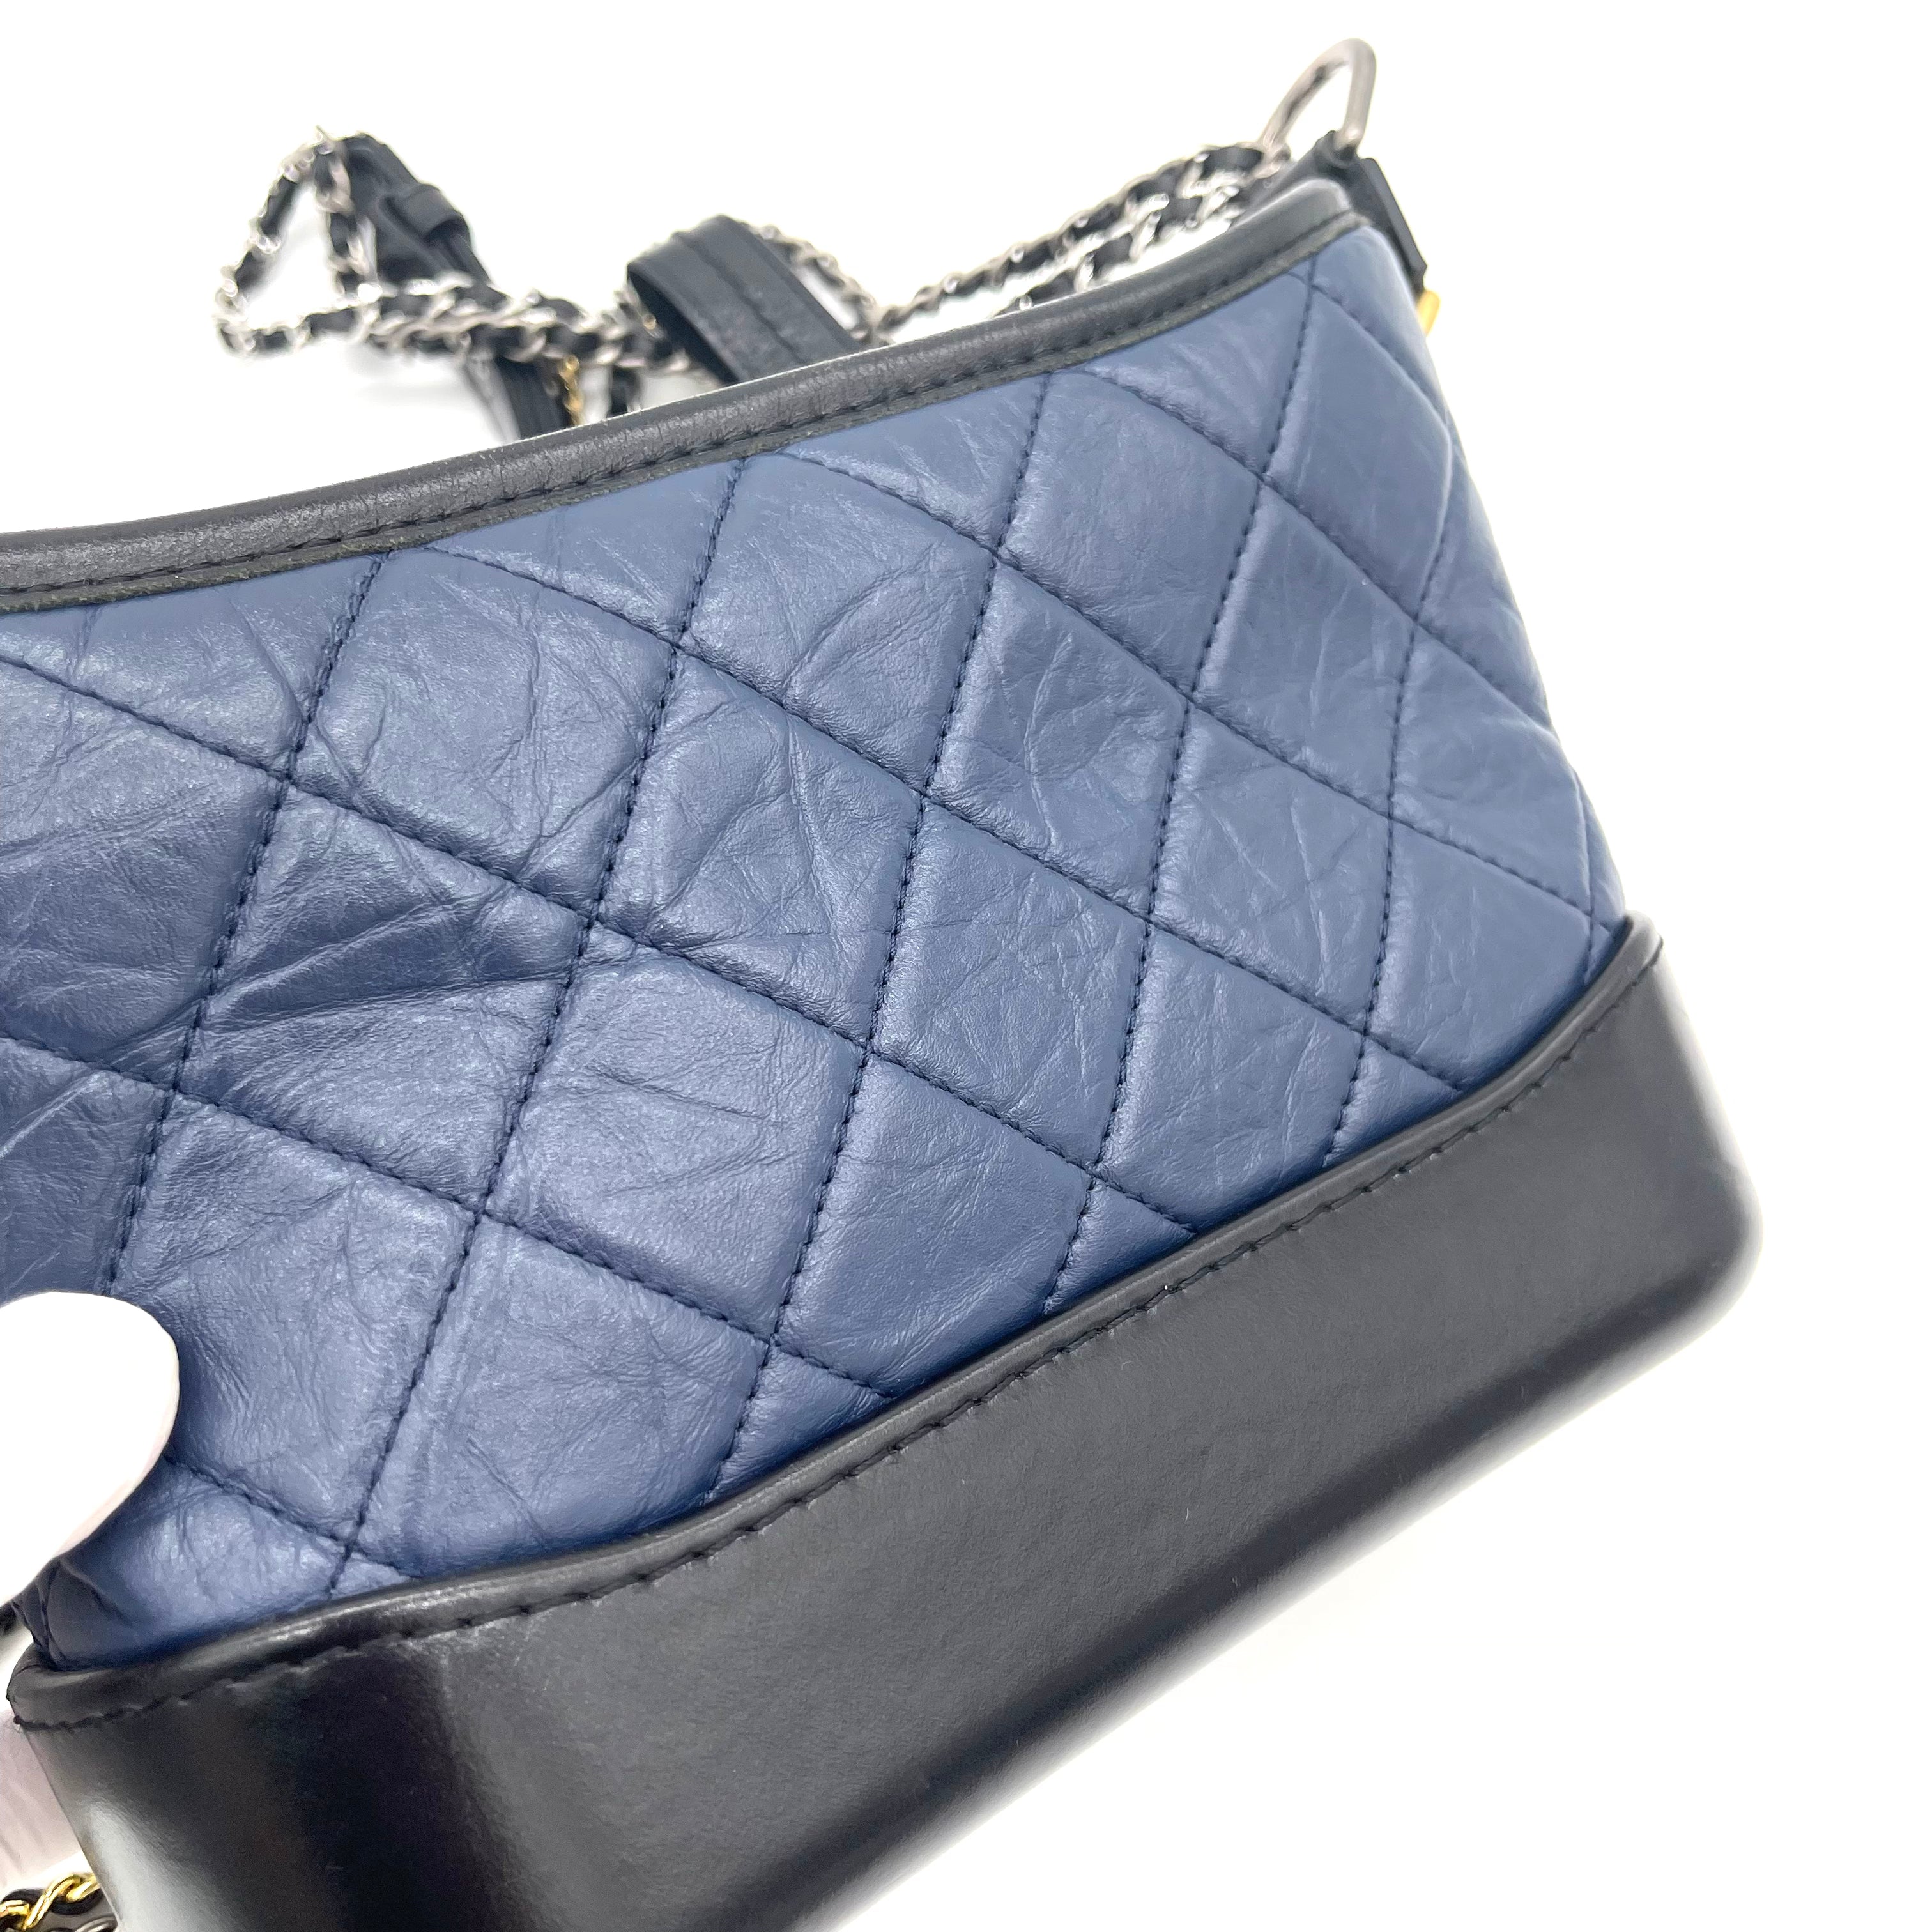 Chanel 's Gabrielle Hobo Bag in Blue